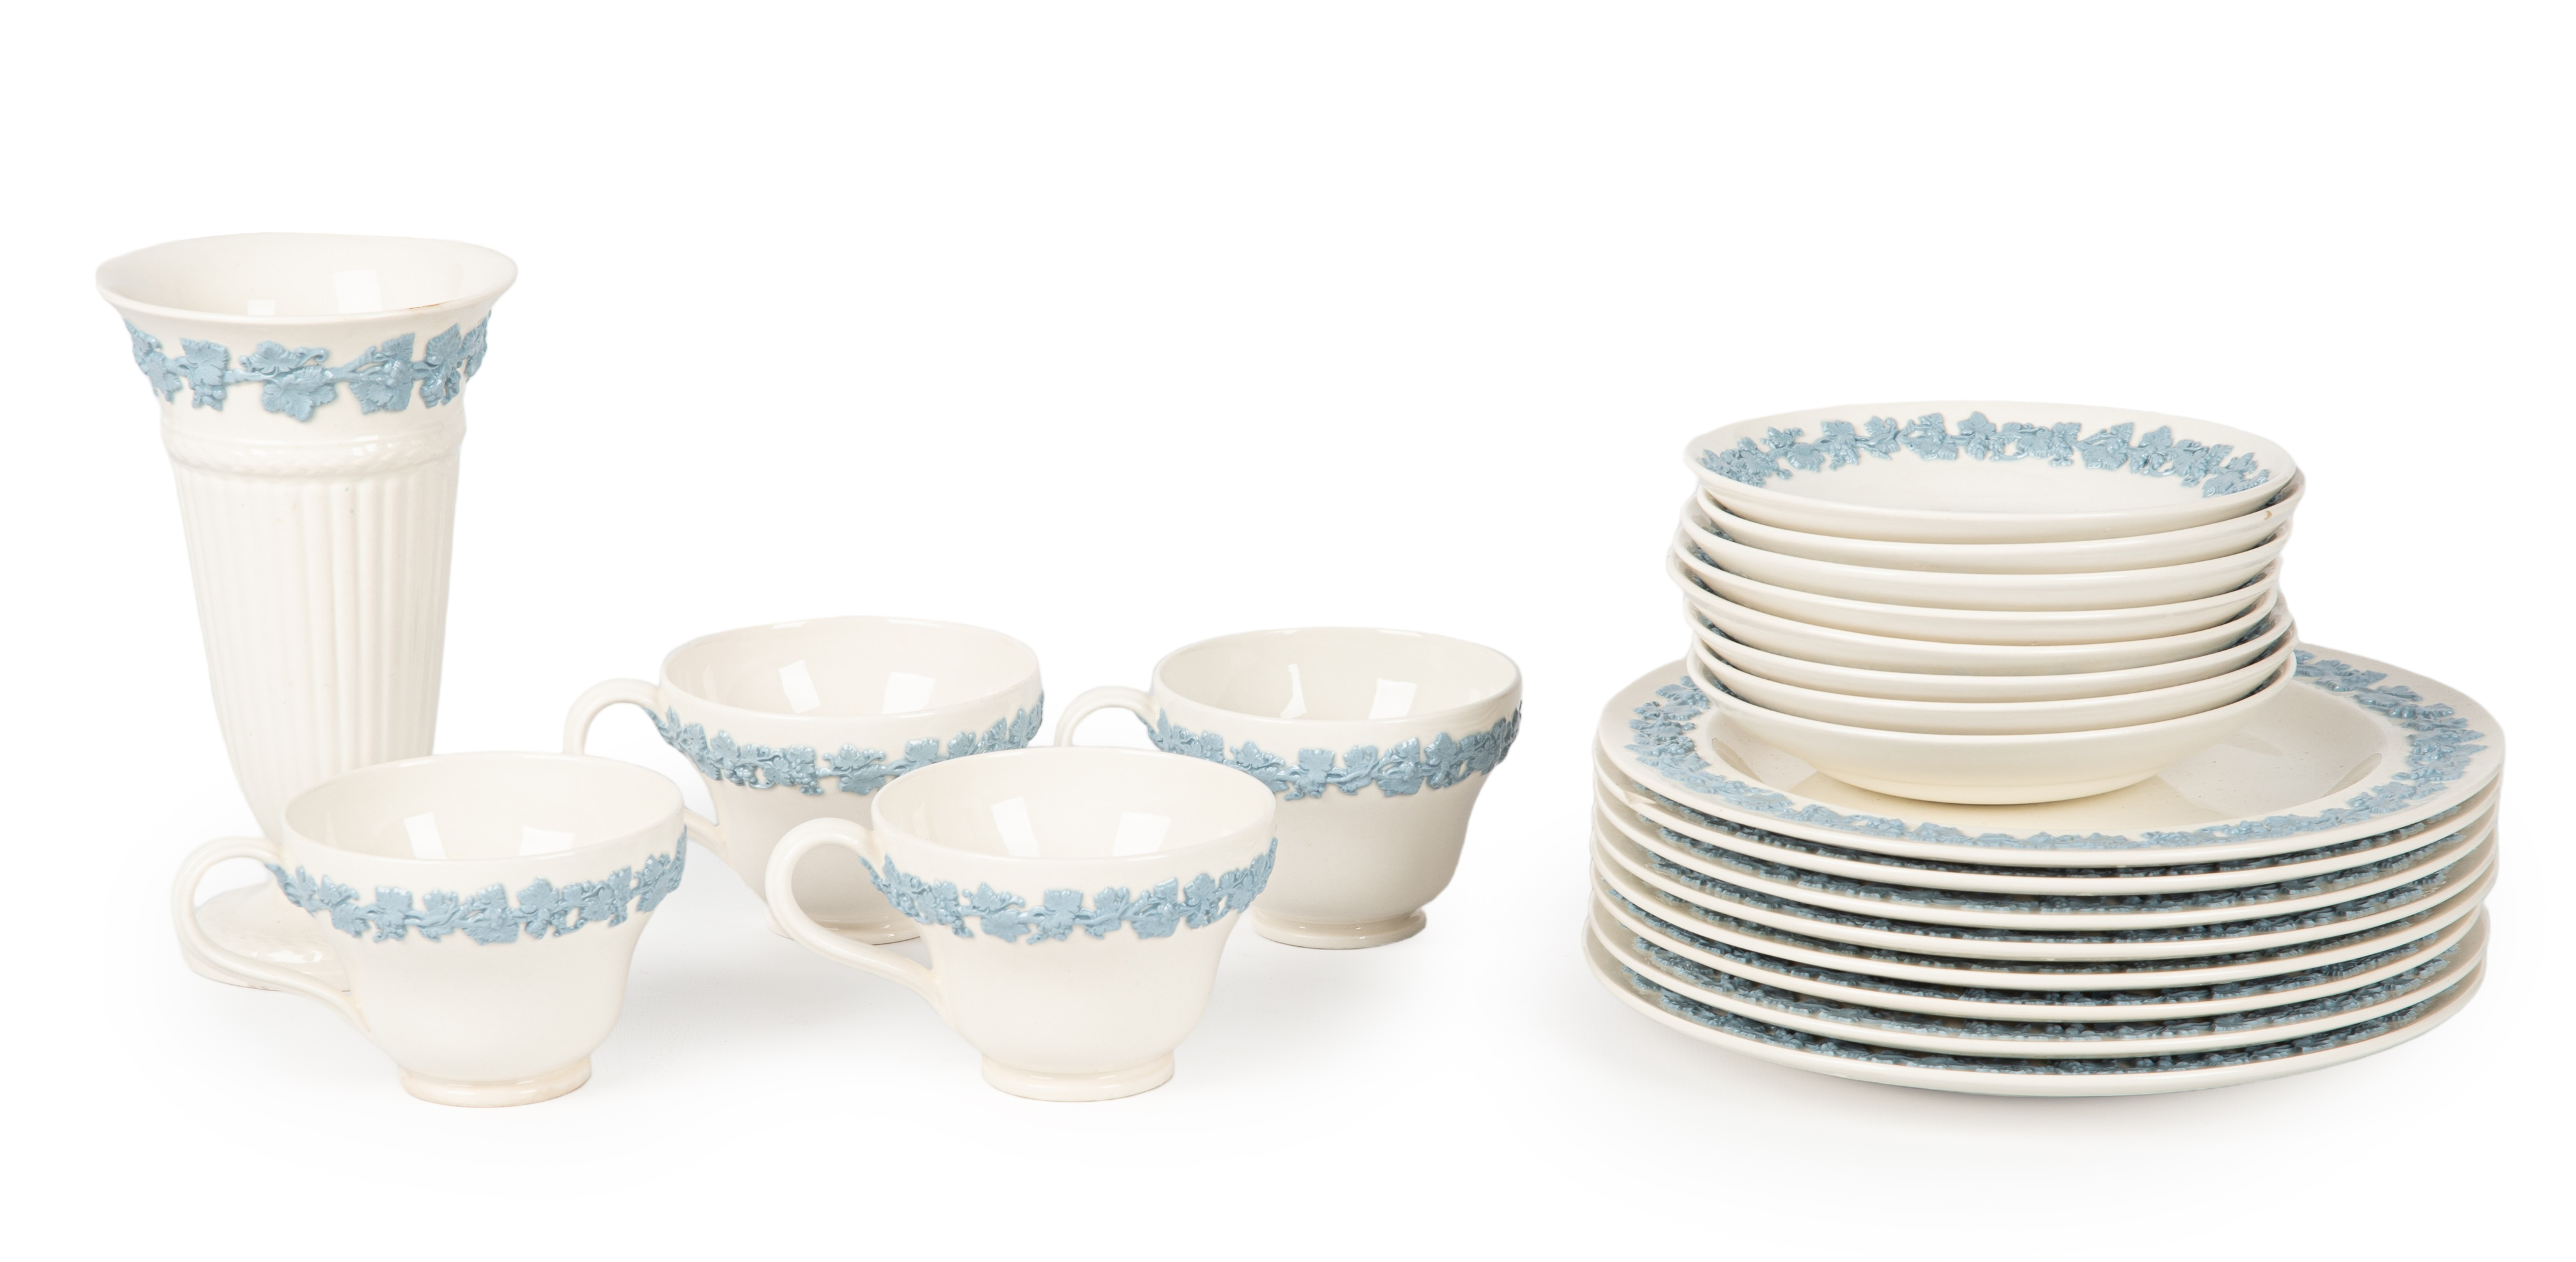  21 Pcs Wedgwood porcelain dinnerware  3b1958